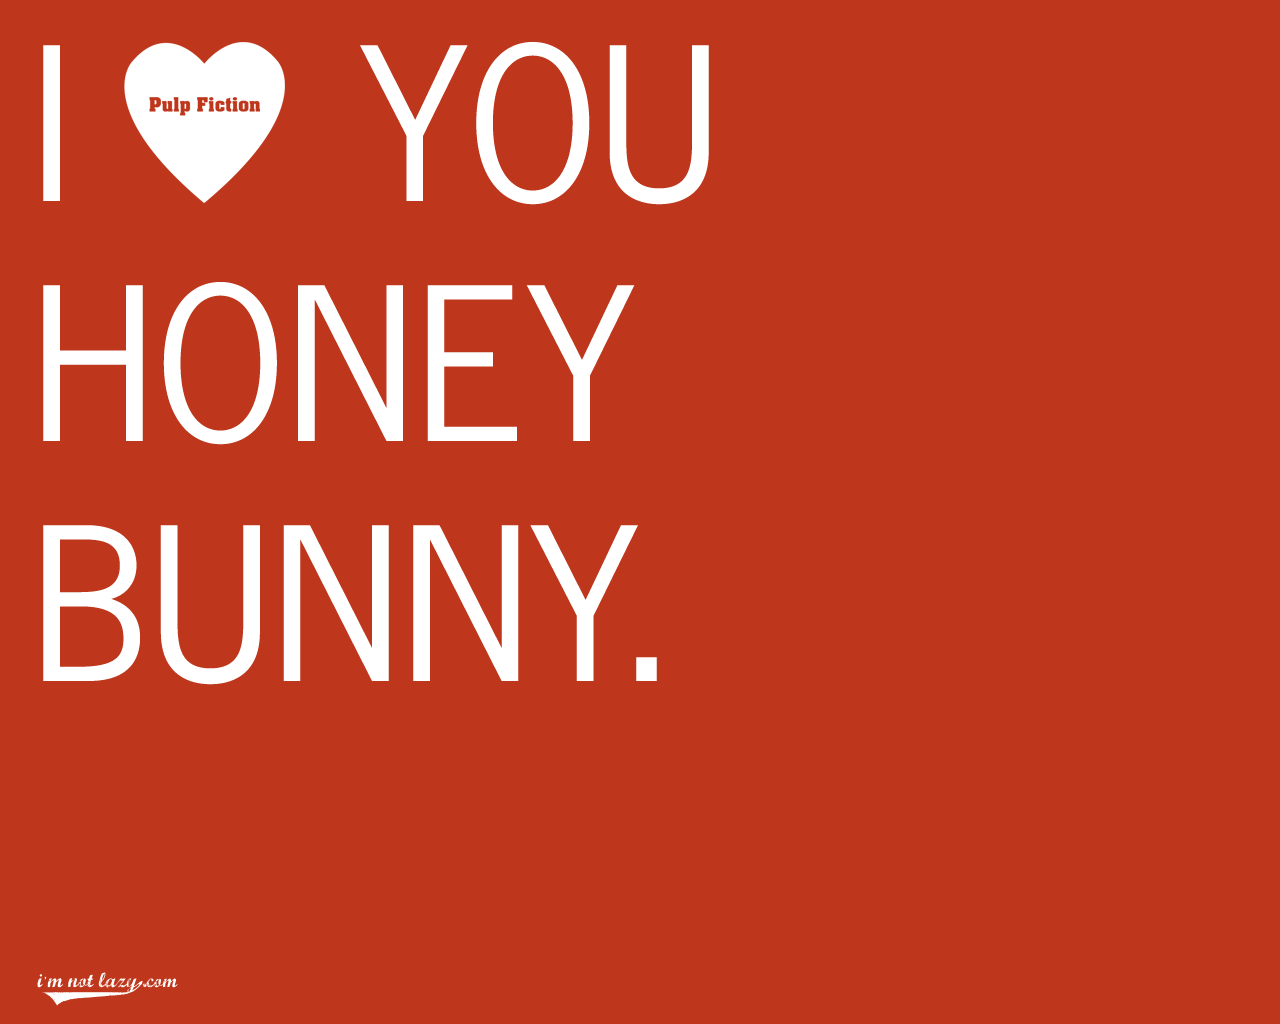 I LOVE YOU HONEY BUNNY. by imnotlazy on DeviantArt